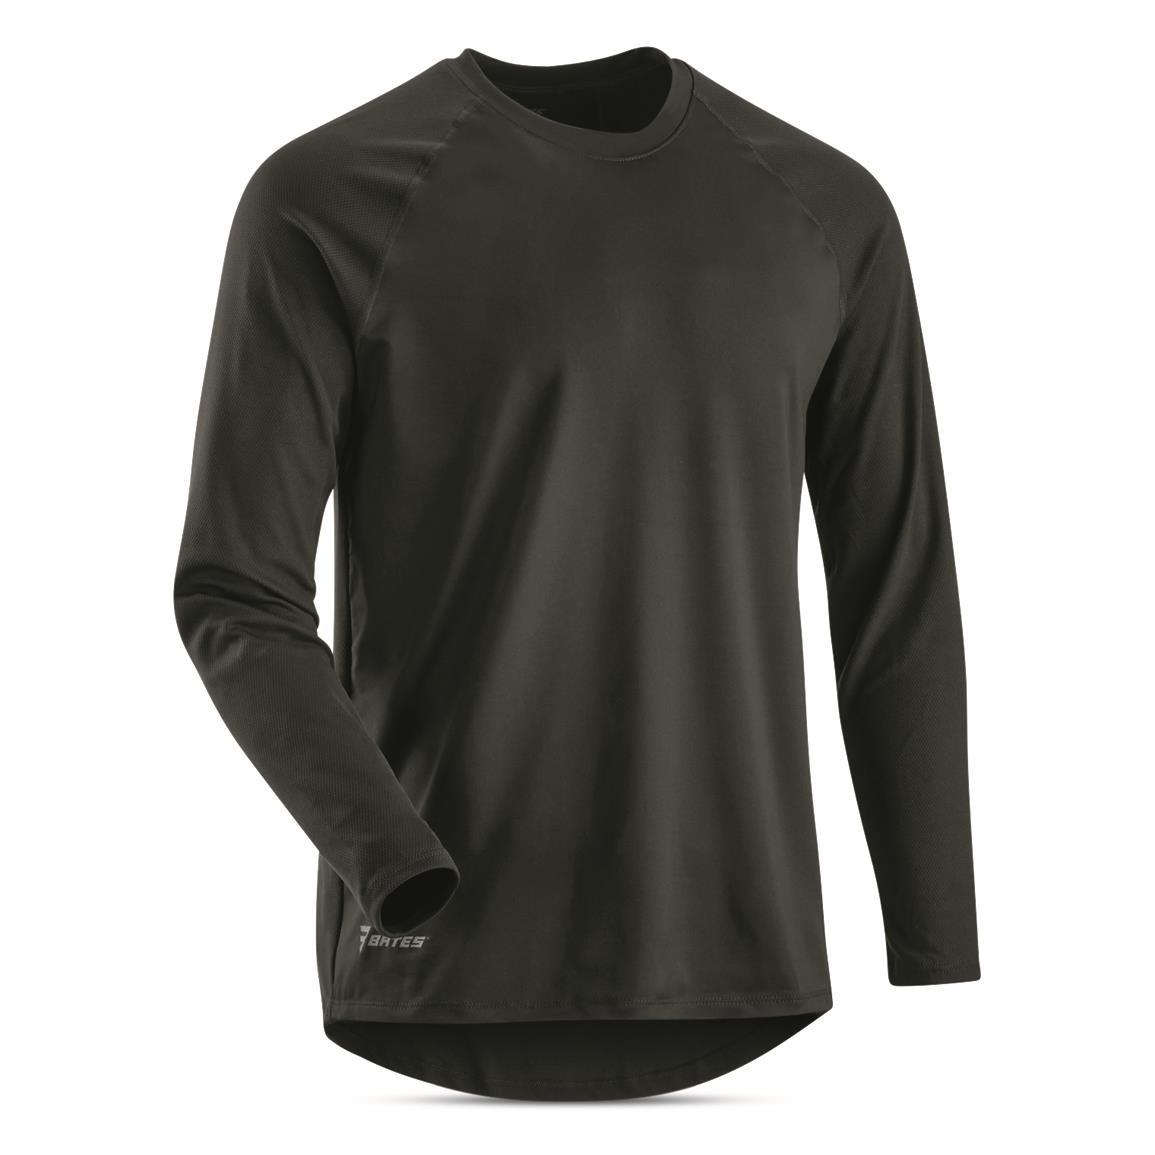 U.S. Military Surplus Bates Long Sleeve Base Layer Shirt, New, Black